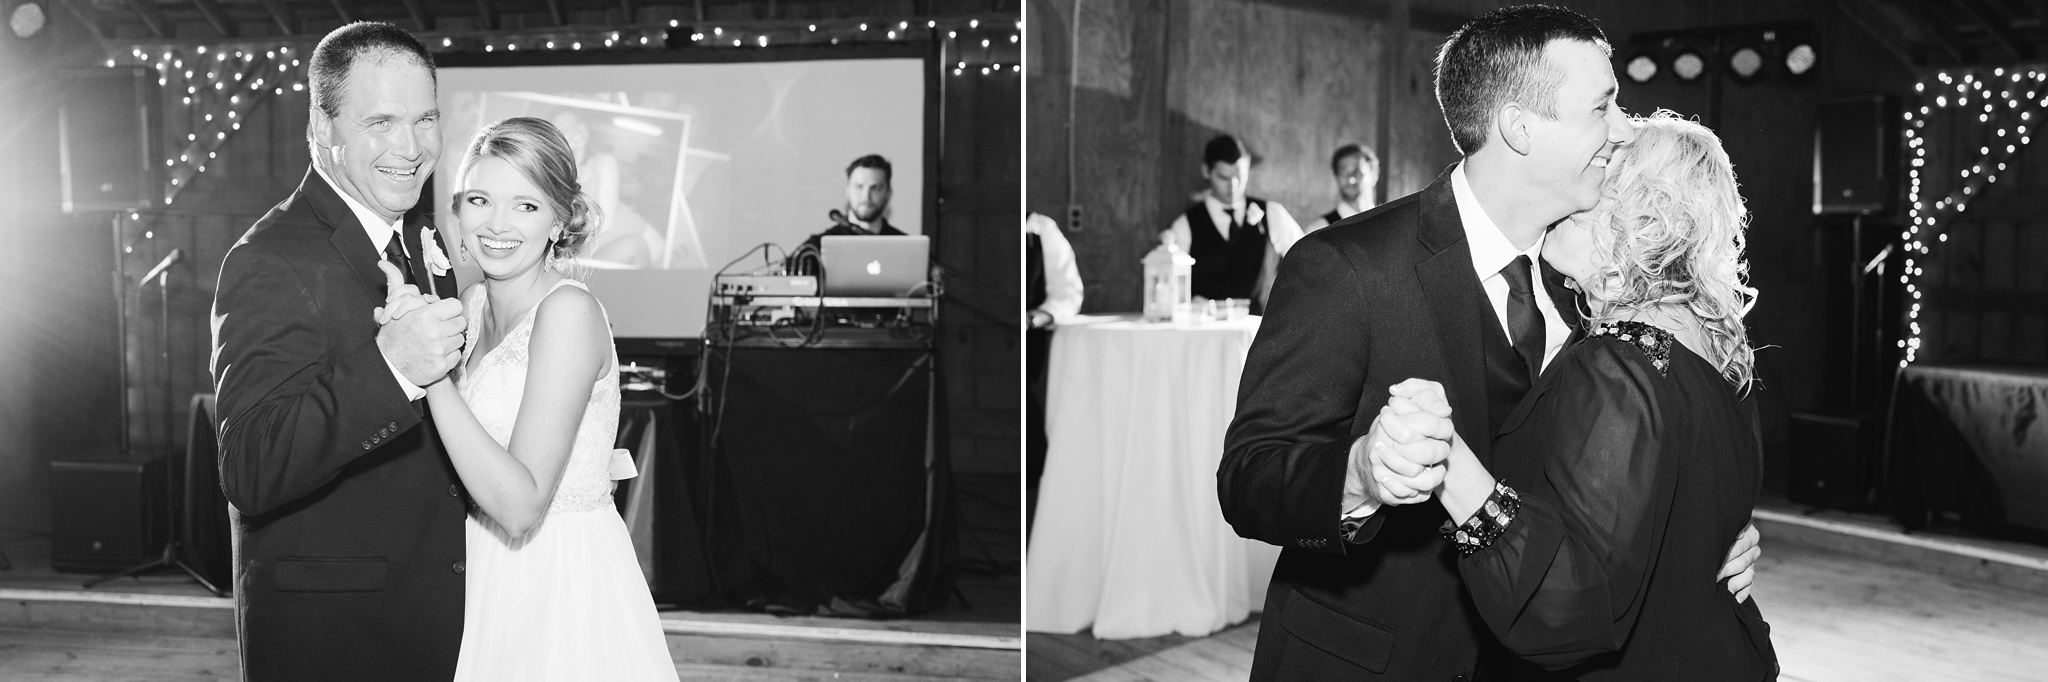 Gray and Black Classic Outdoor Wedding | Birmingham Alabama Wedding Photographers_0052.jpg